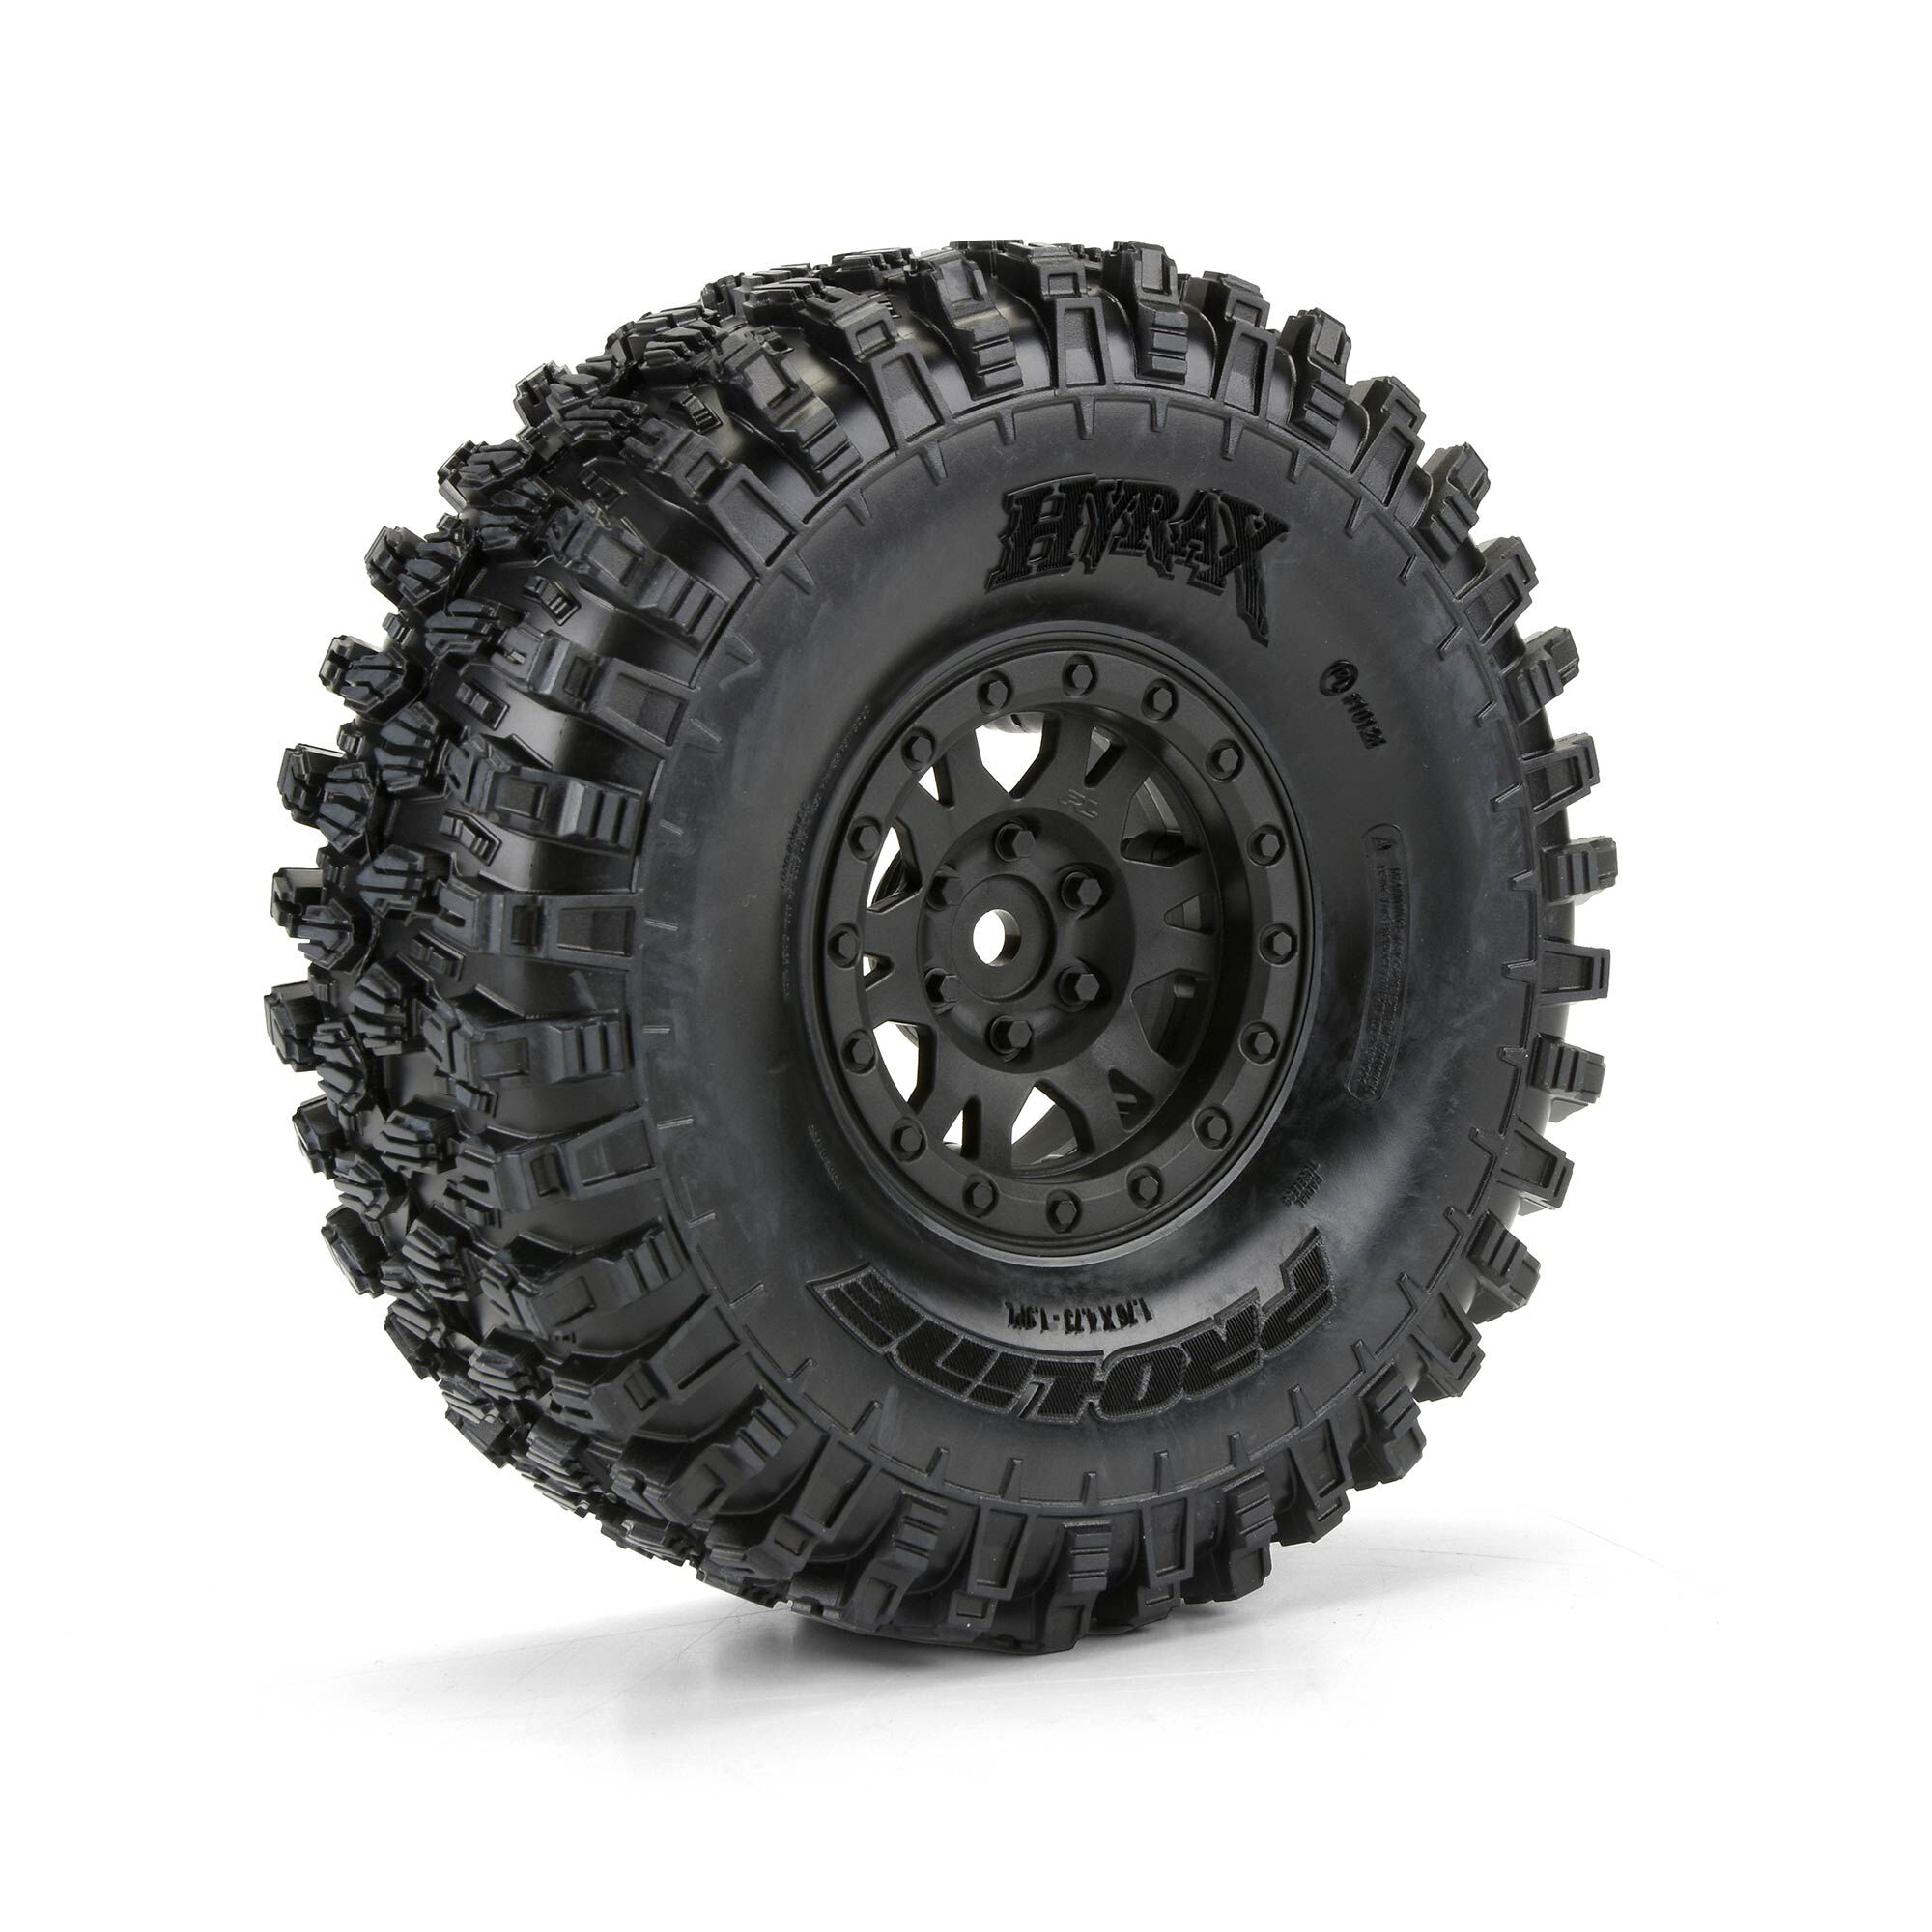 Pro-line 10128-10 Hyrax 1.9" G8 Rock Terrain Mounted Tires Wheels 4 Rock Crawler 